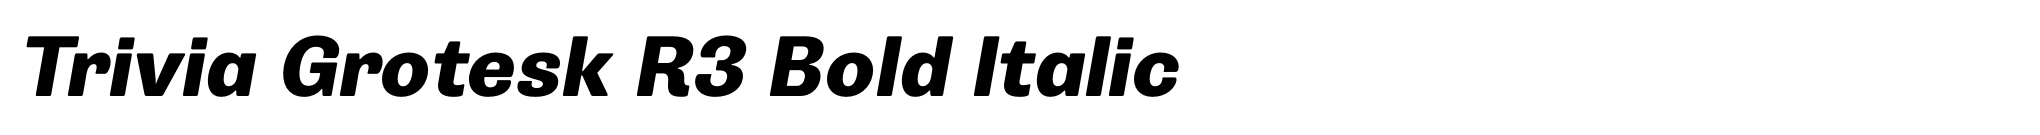 Trivia Grotesk R3 Bold Italic image